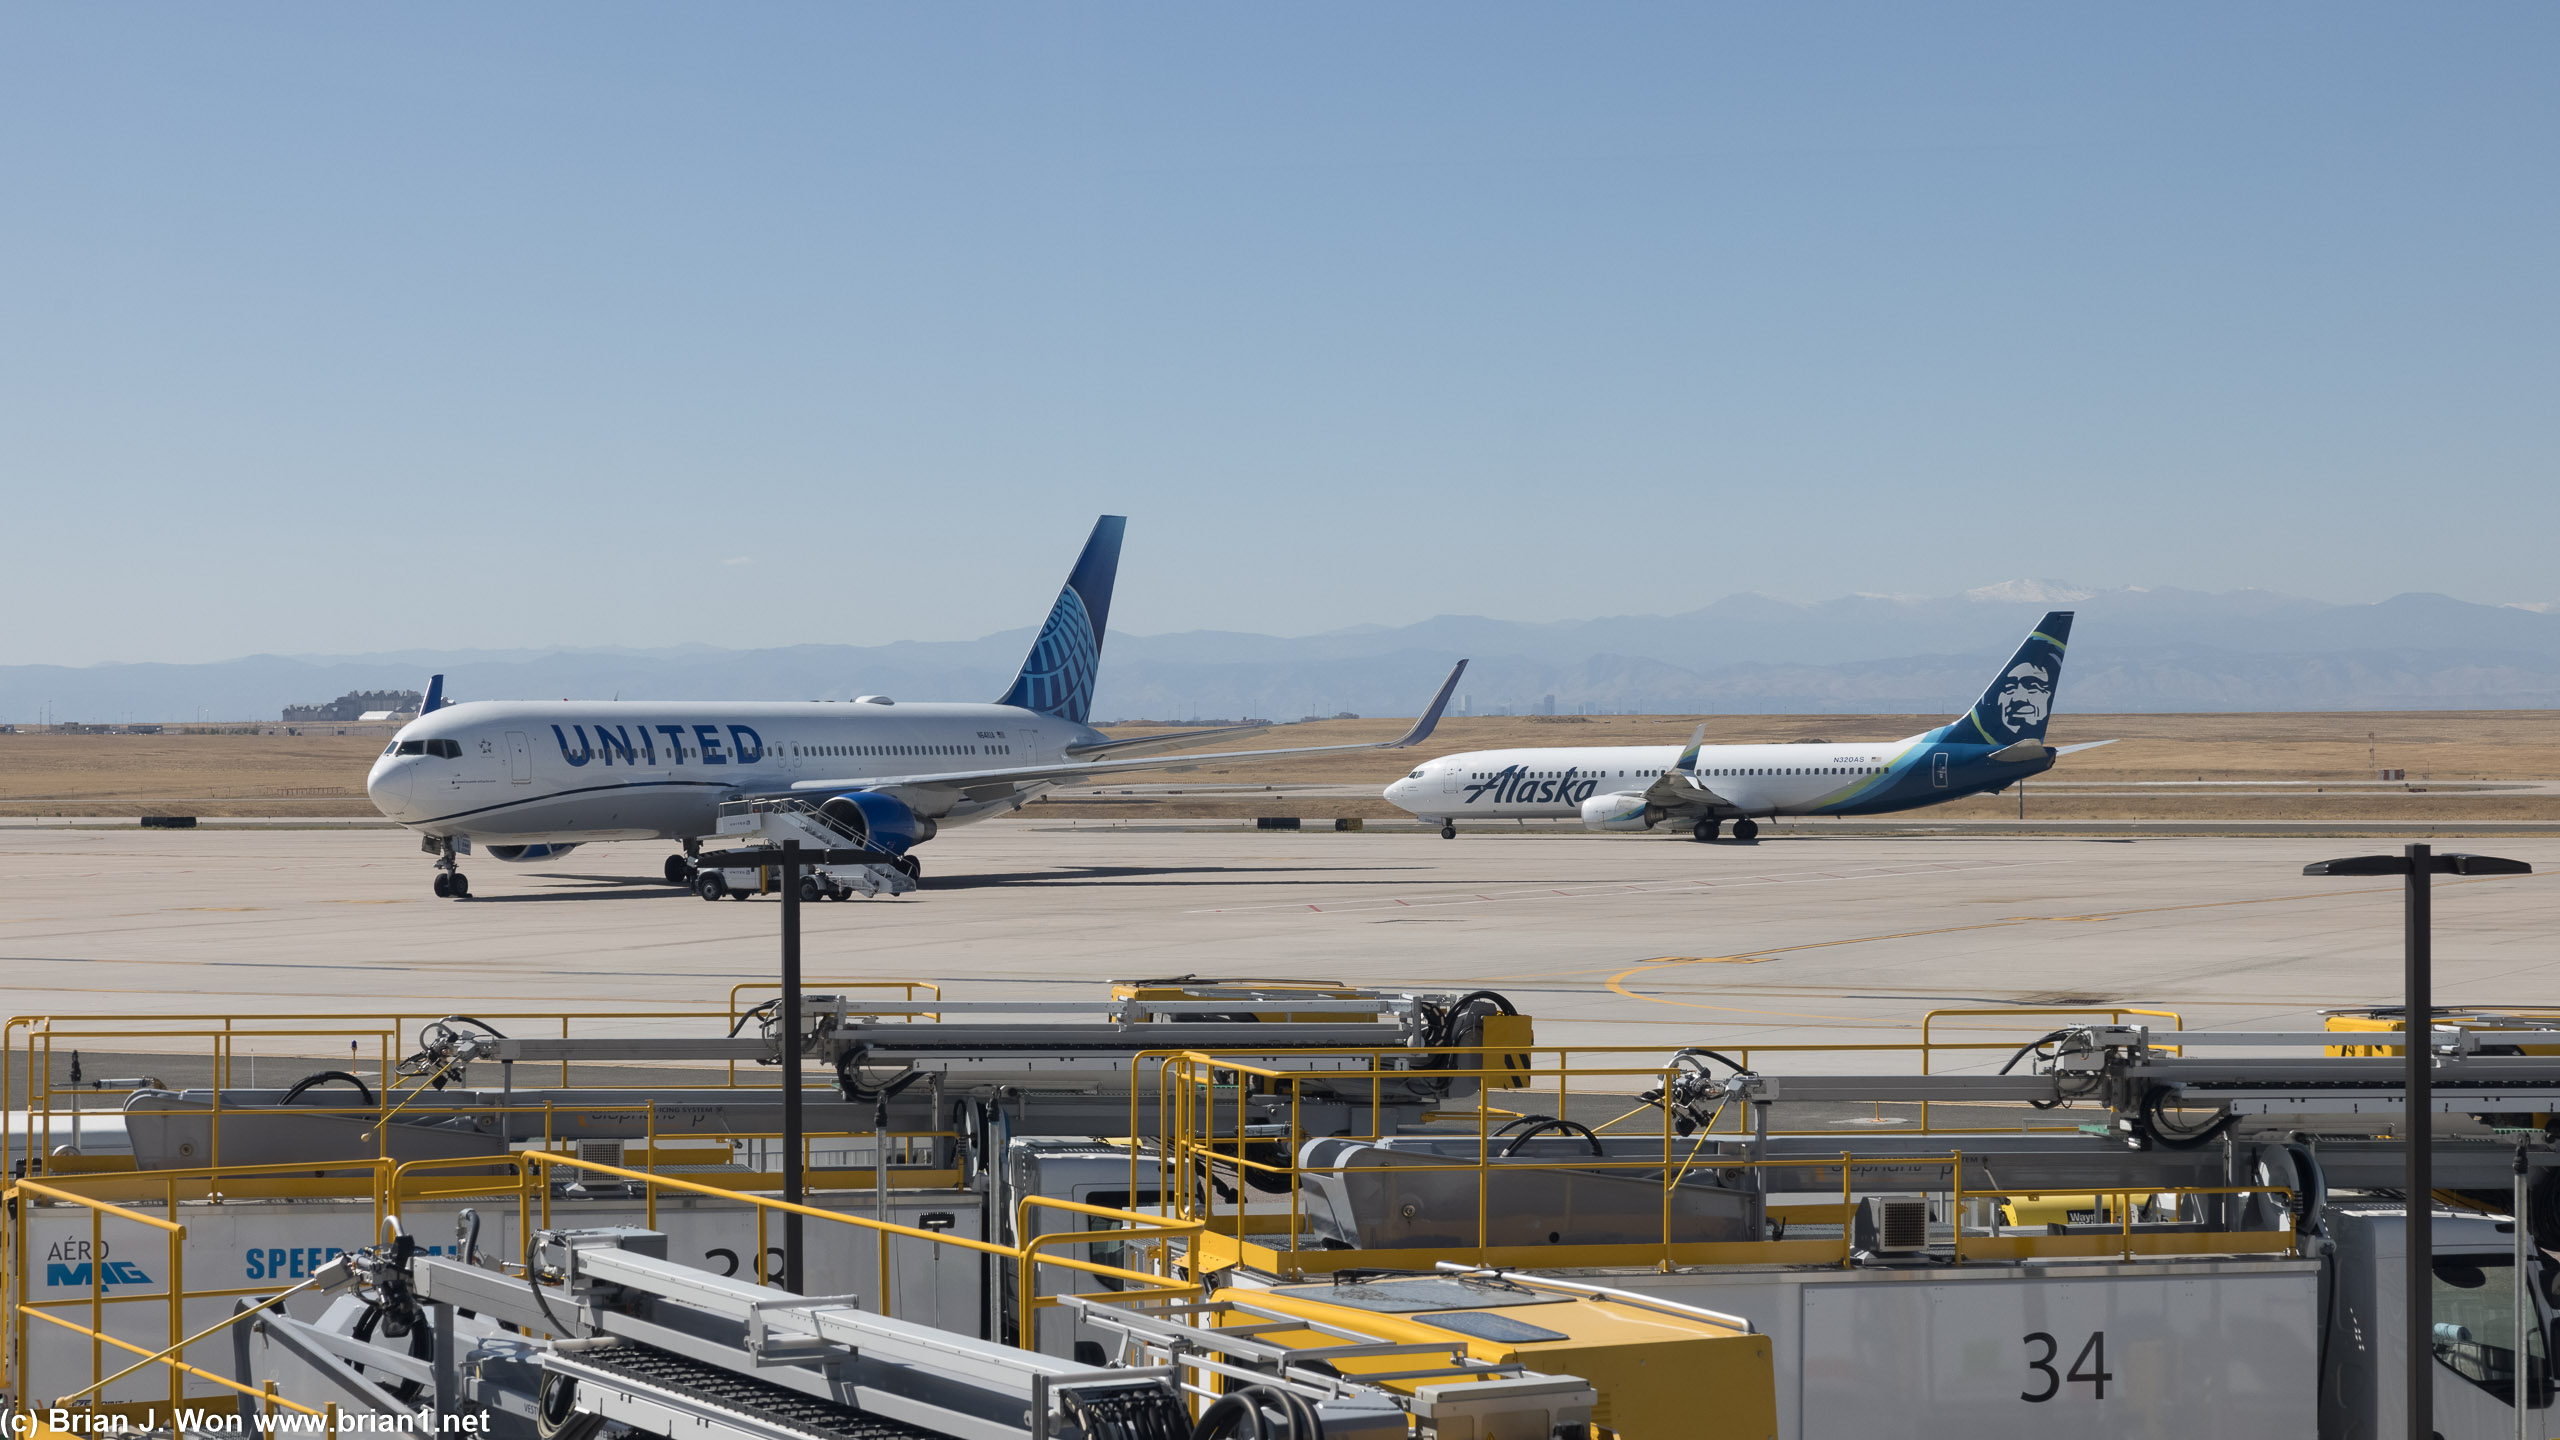 United 767-300ER next to an Alaska 737-900ER.